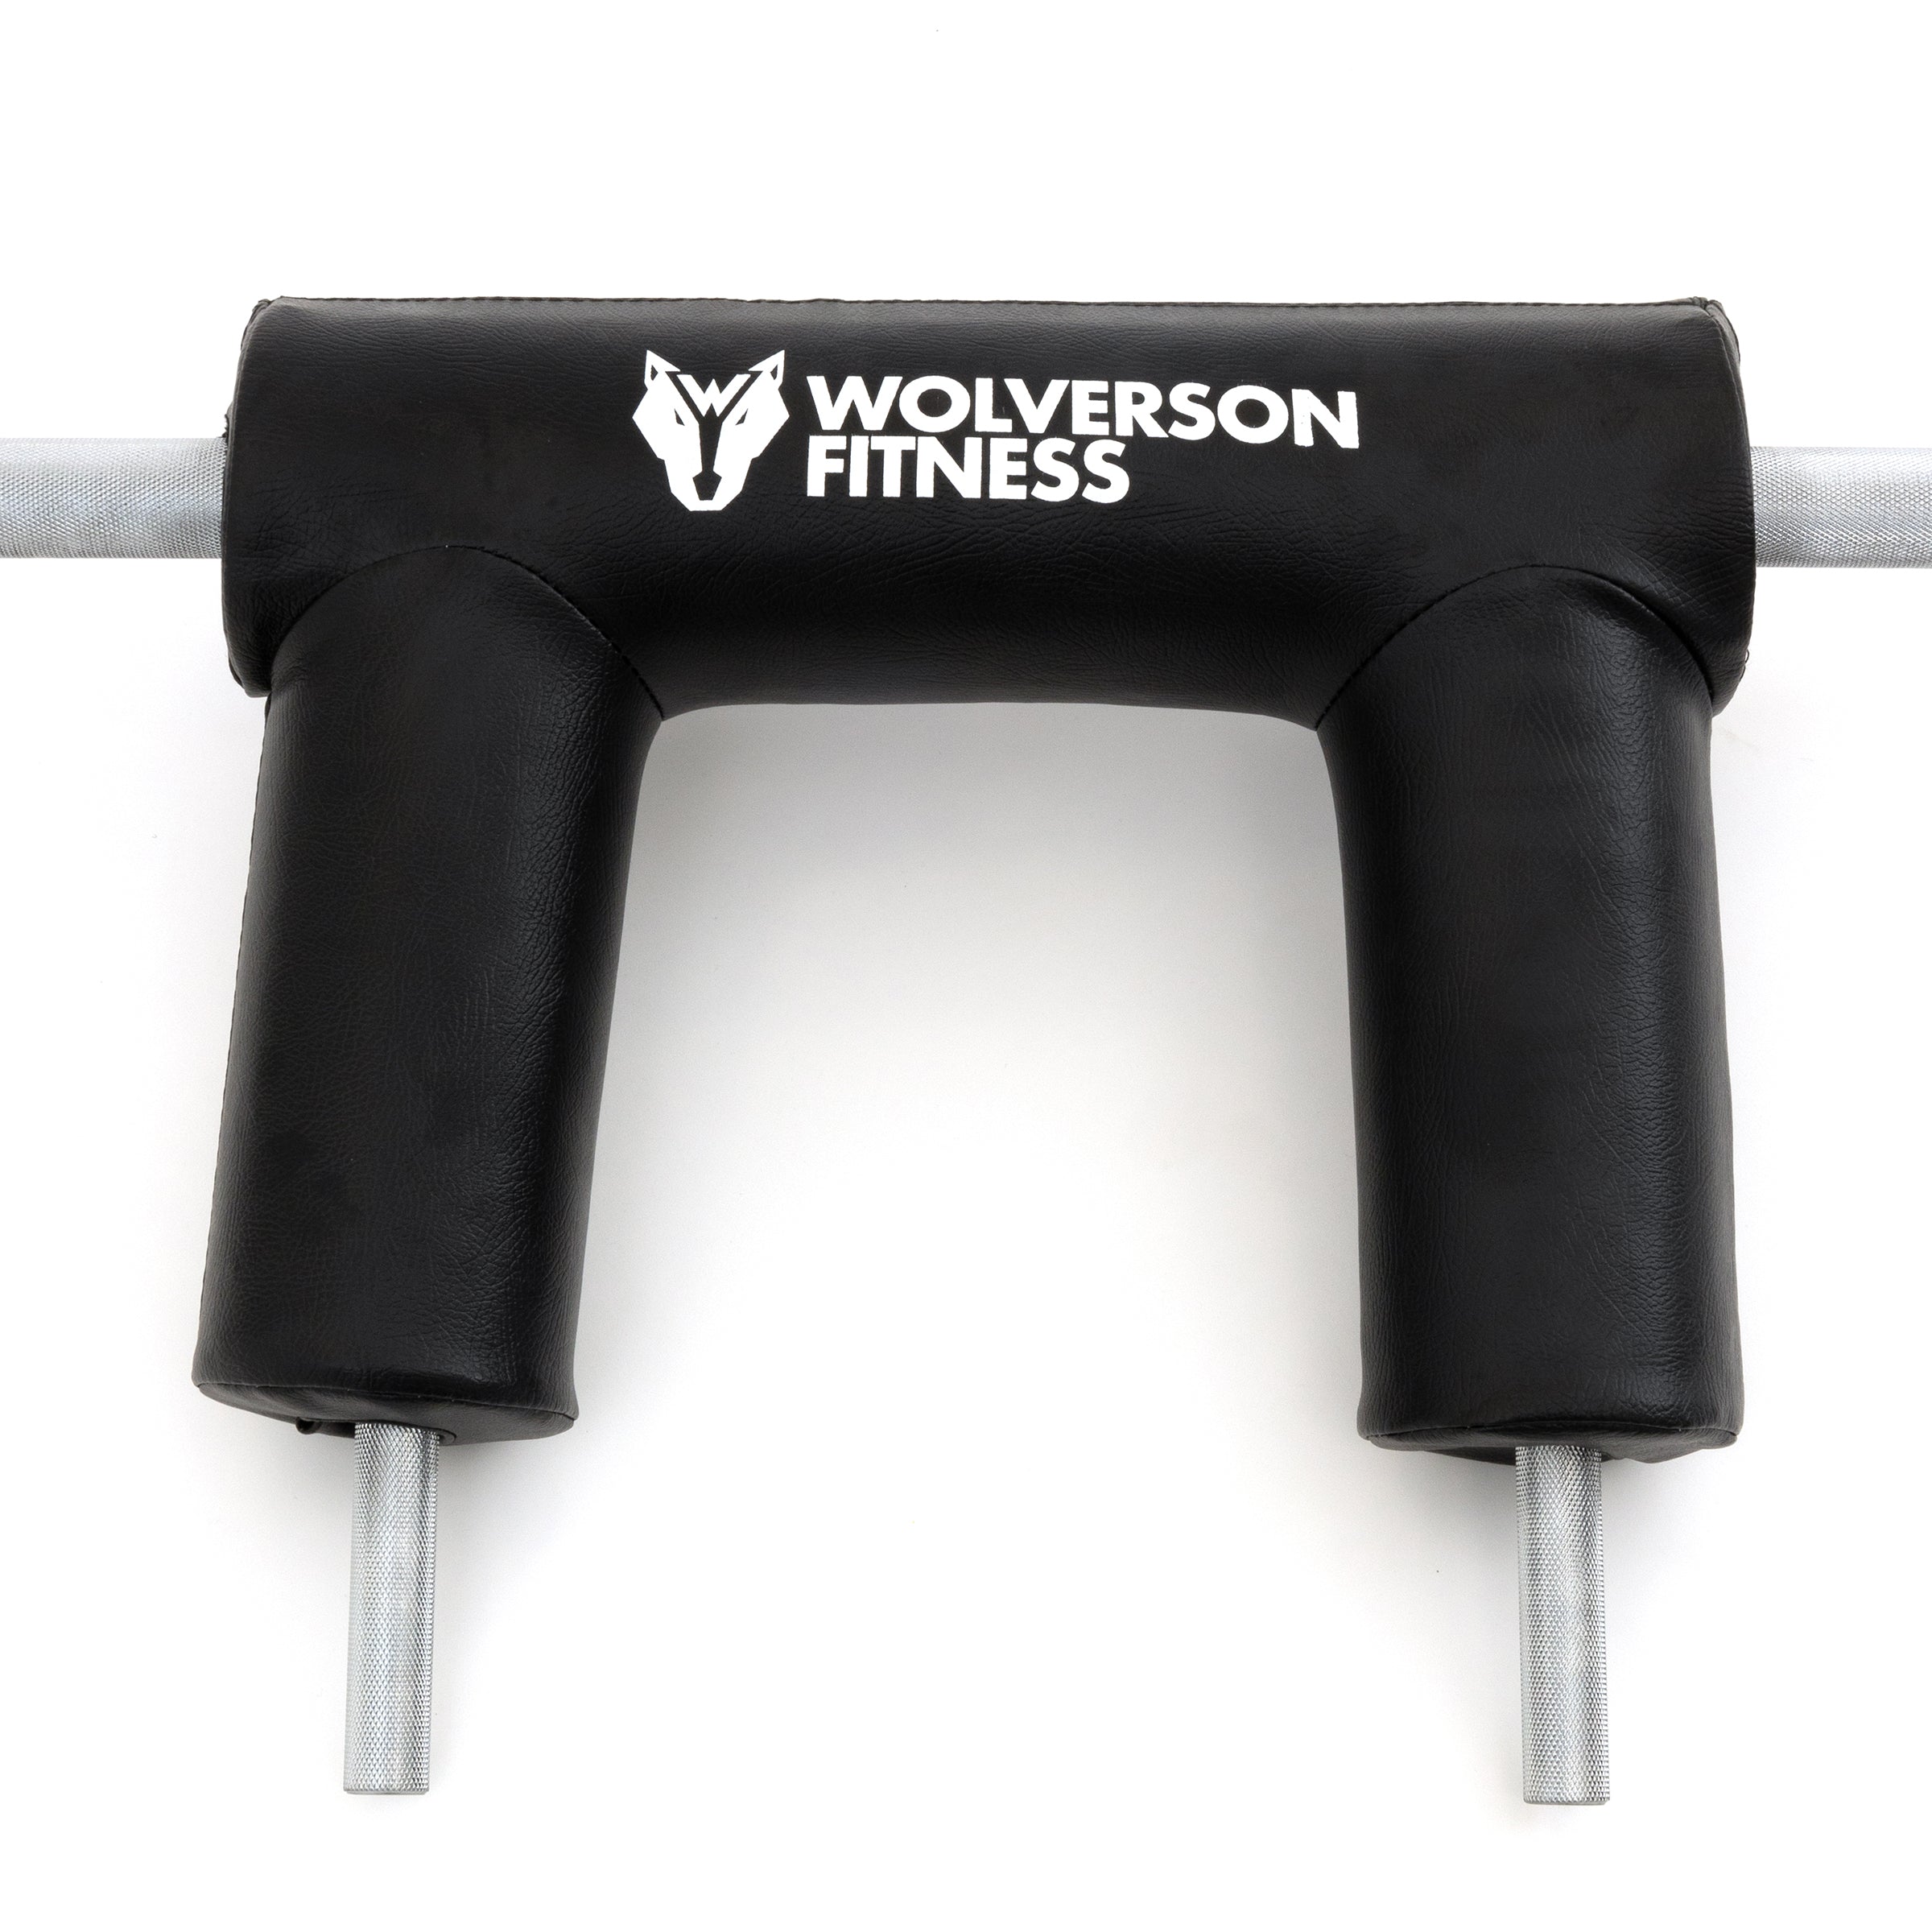 Wolverson Heavy Duty Safety Squat Bar